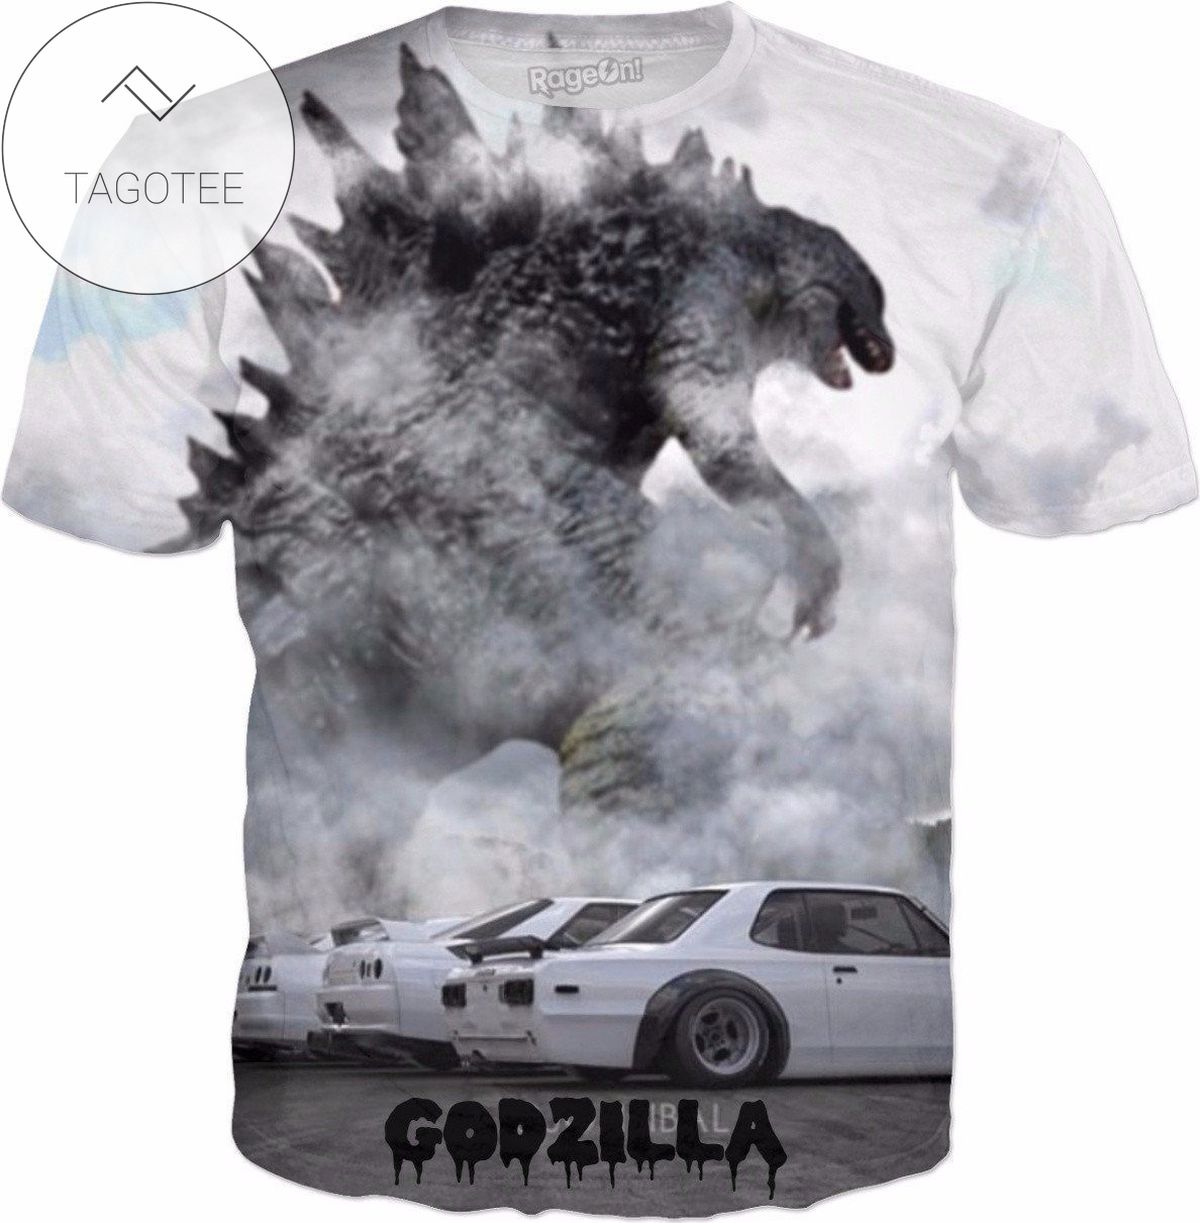 Rageon “godzilla” Nissan Gtr’s All Over Print T-shirt